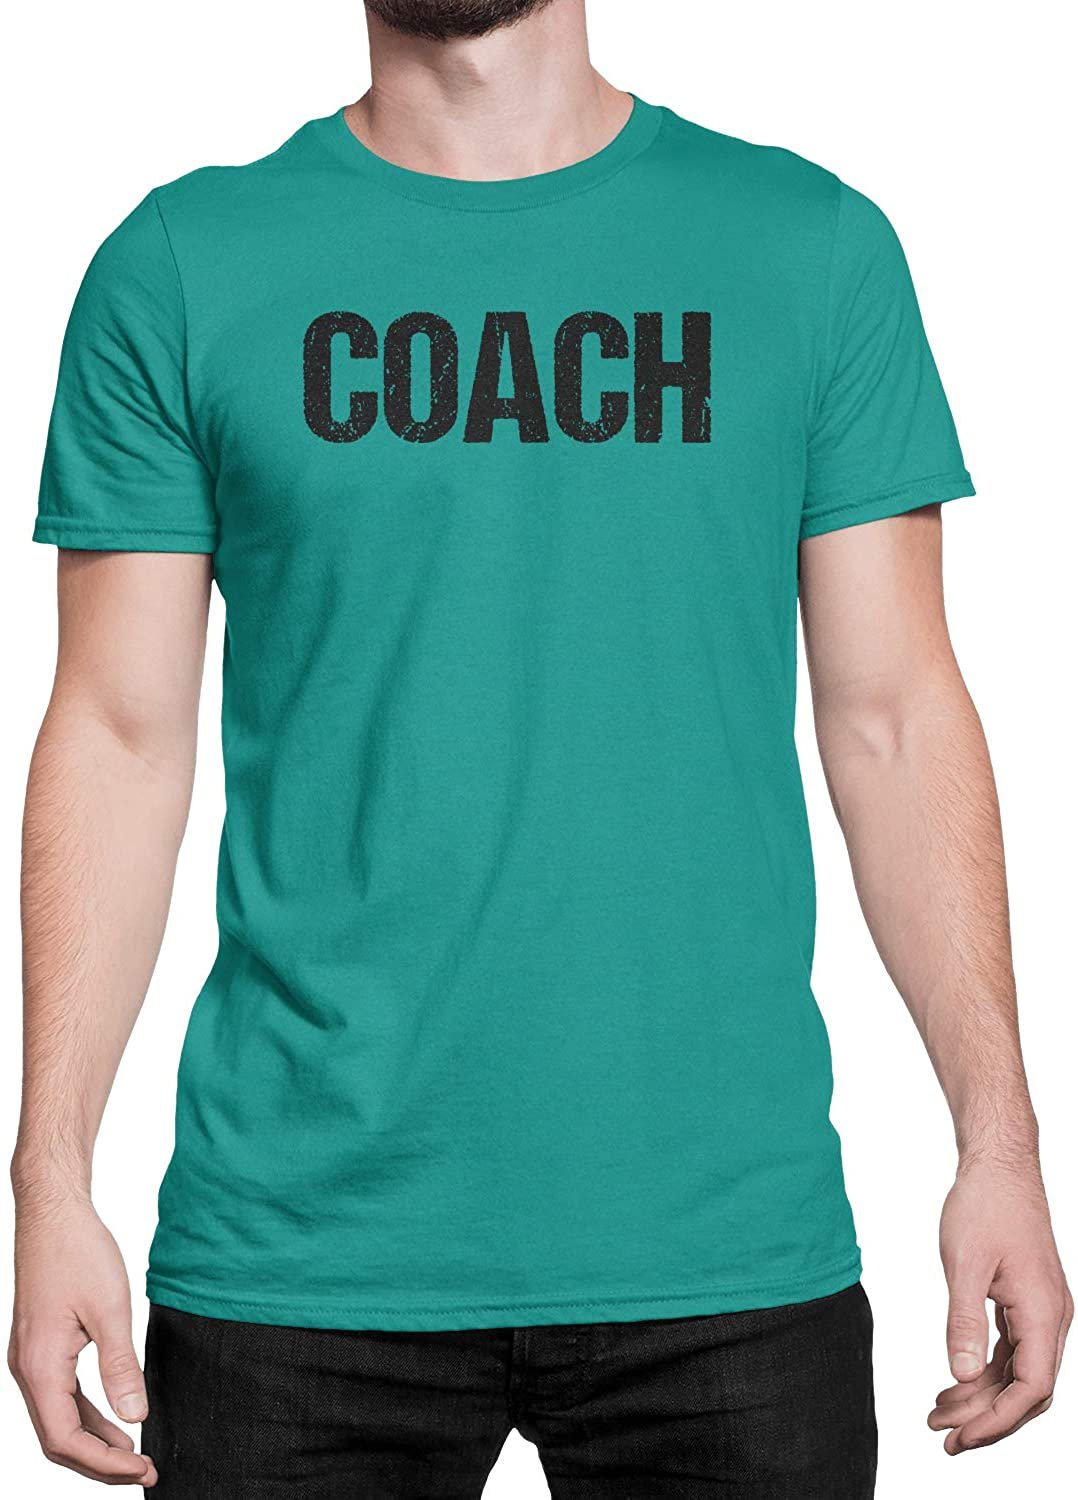 Coach T-Shirt Sports Coaching Tee Shirt (Aqua &amp; Black, Distressed)